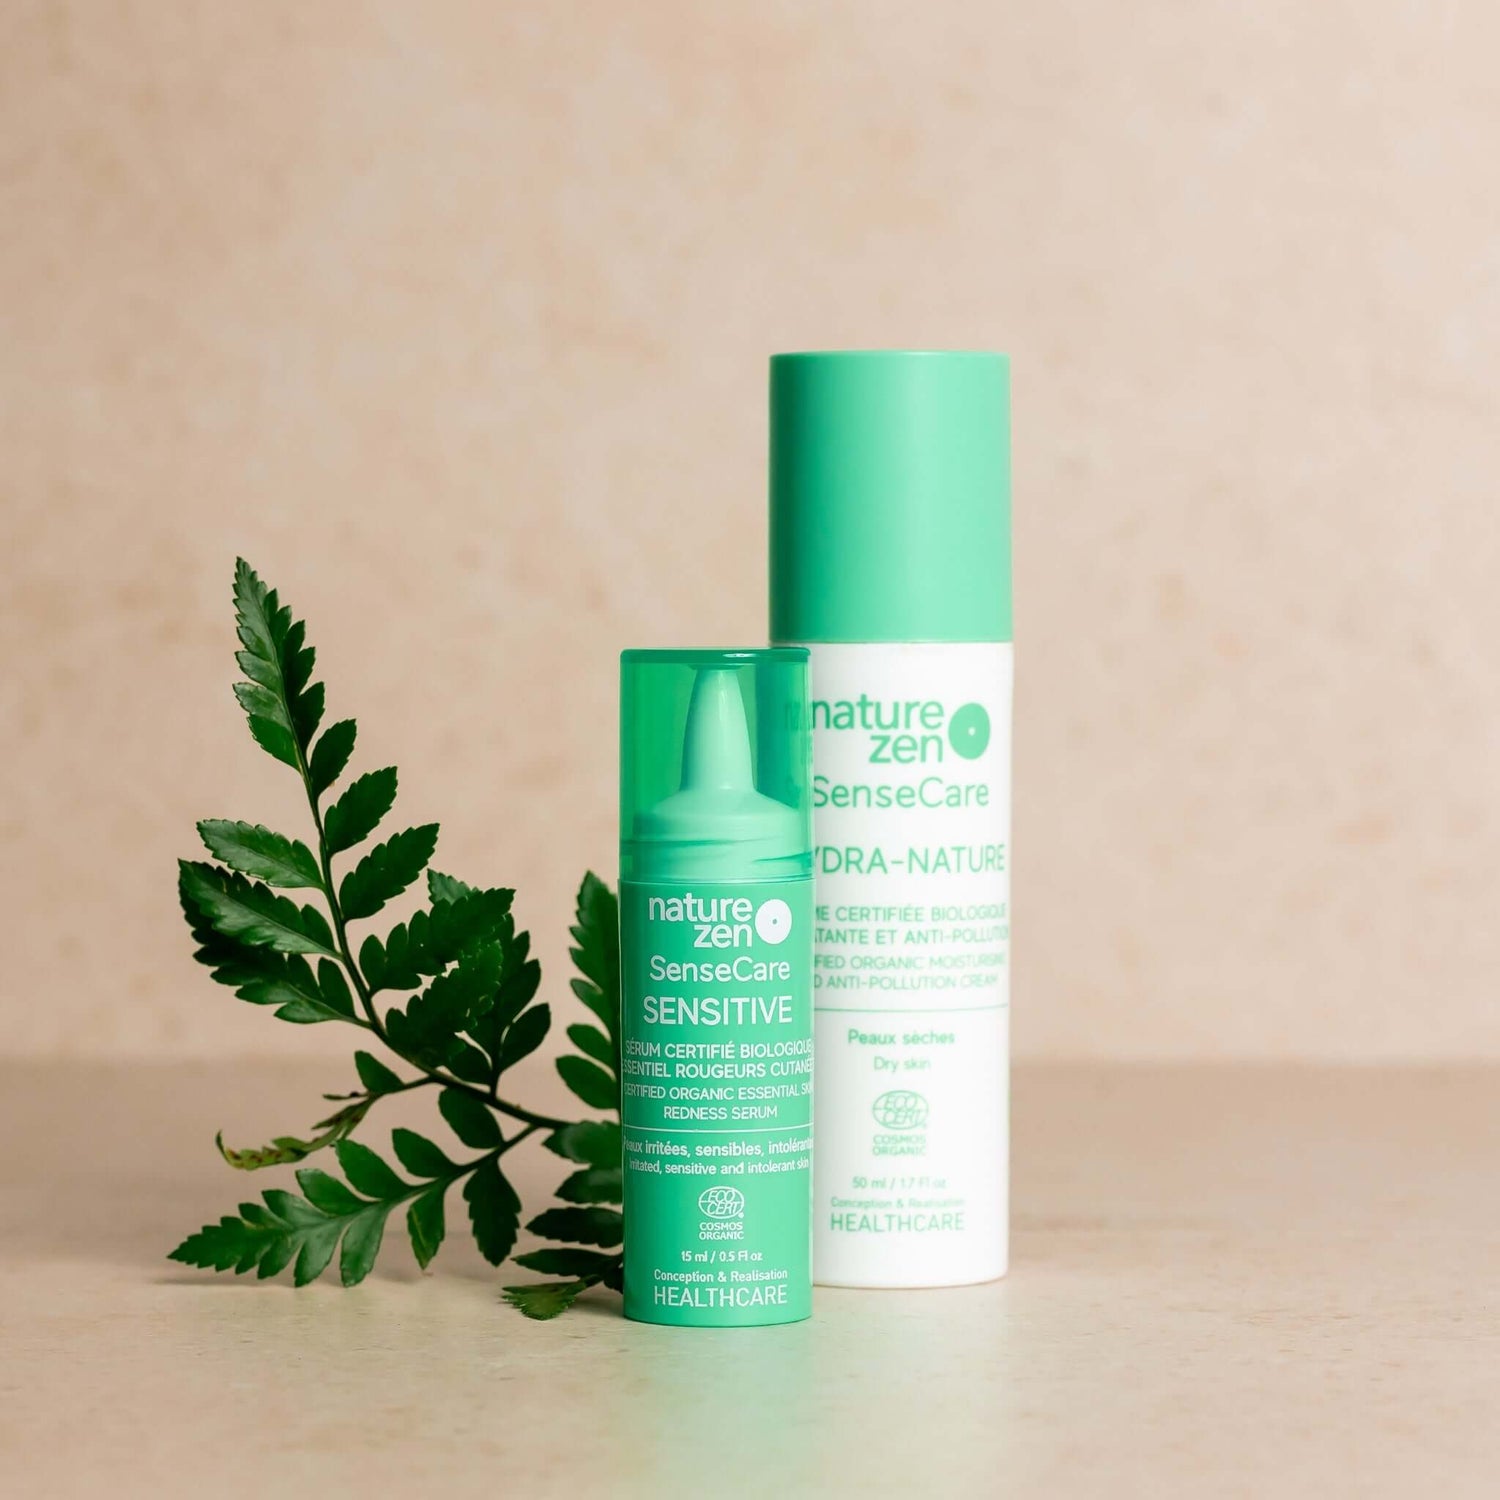 Nature Zen Sensecare Duo Sensitive Serum + Hydra Nature Moisturizer for Dry Skin duo